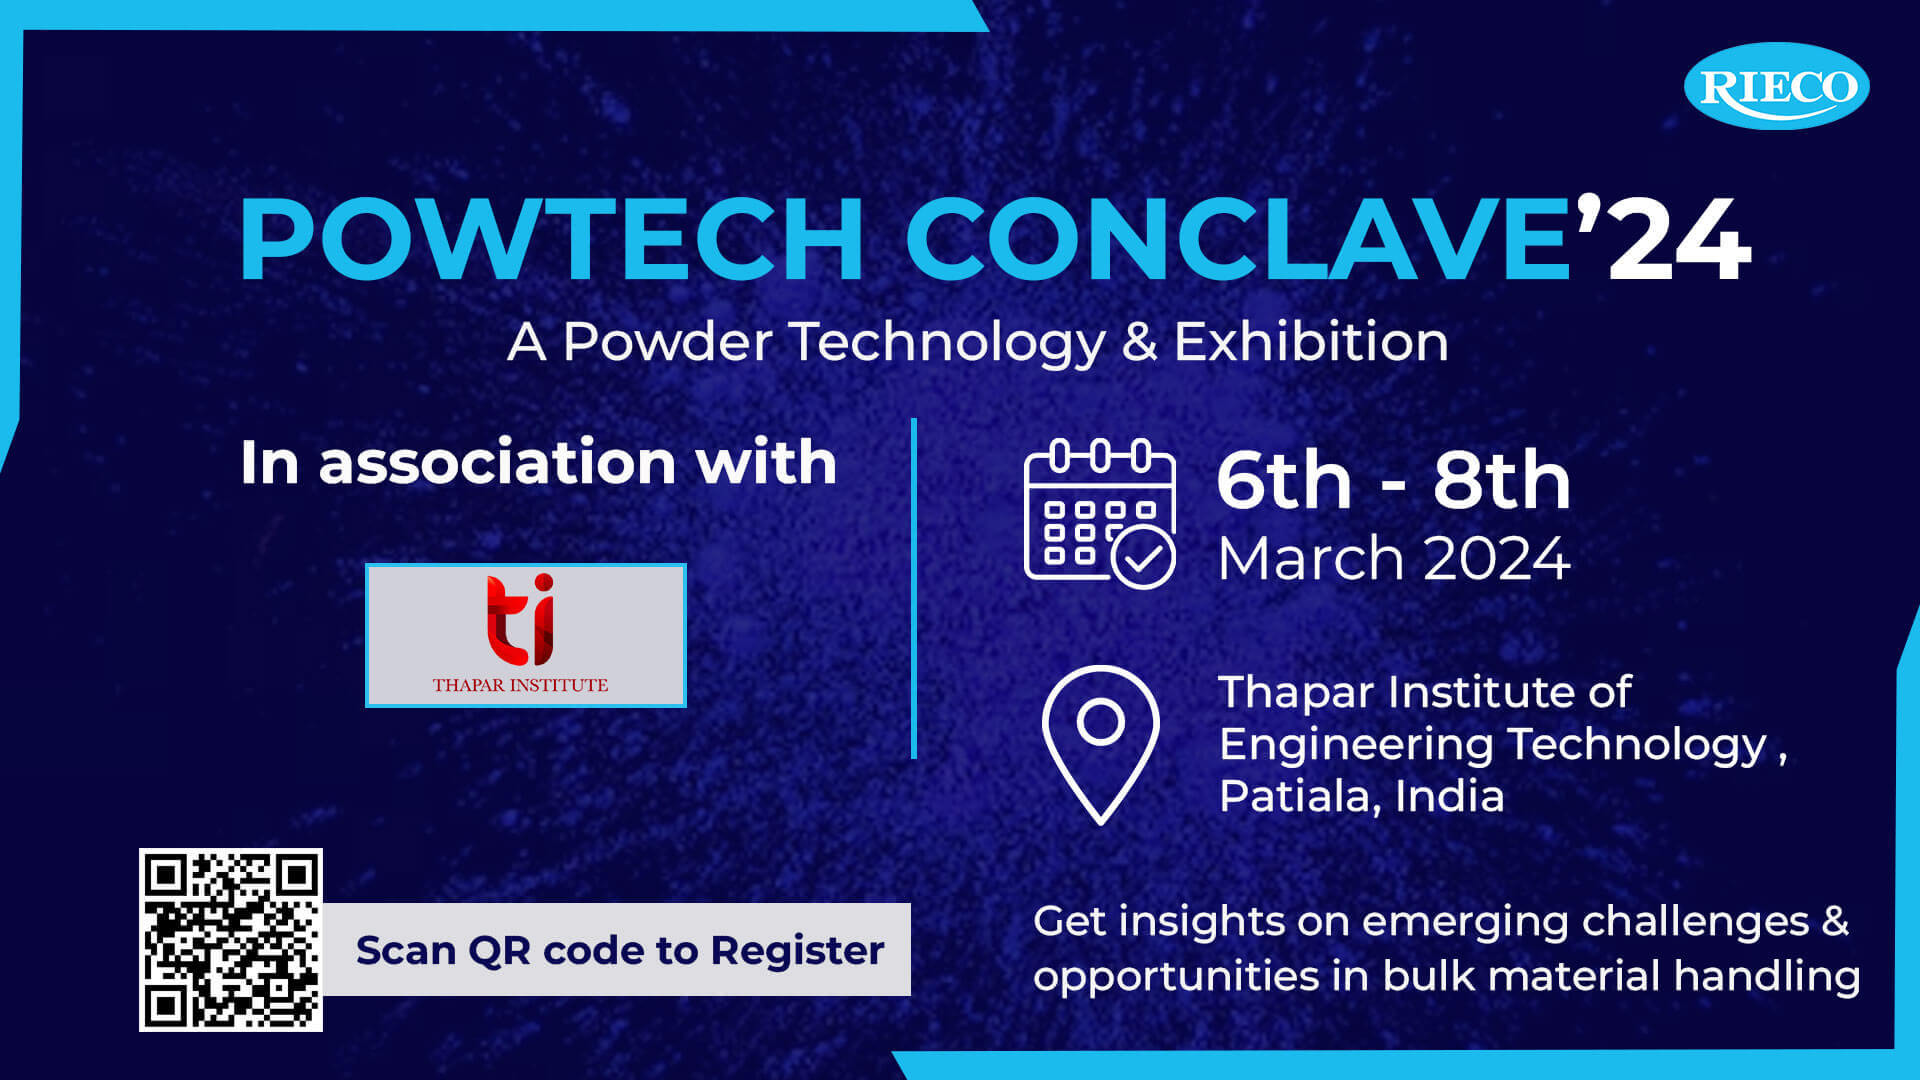 Powtech Conclave'24 powder technology exhibition